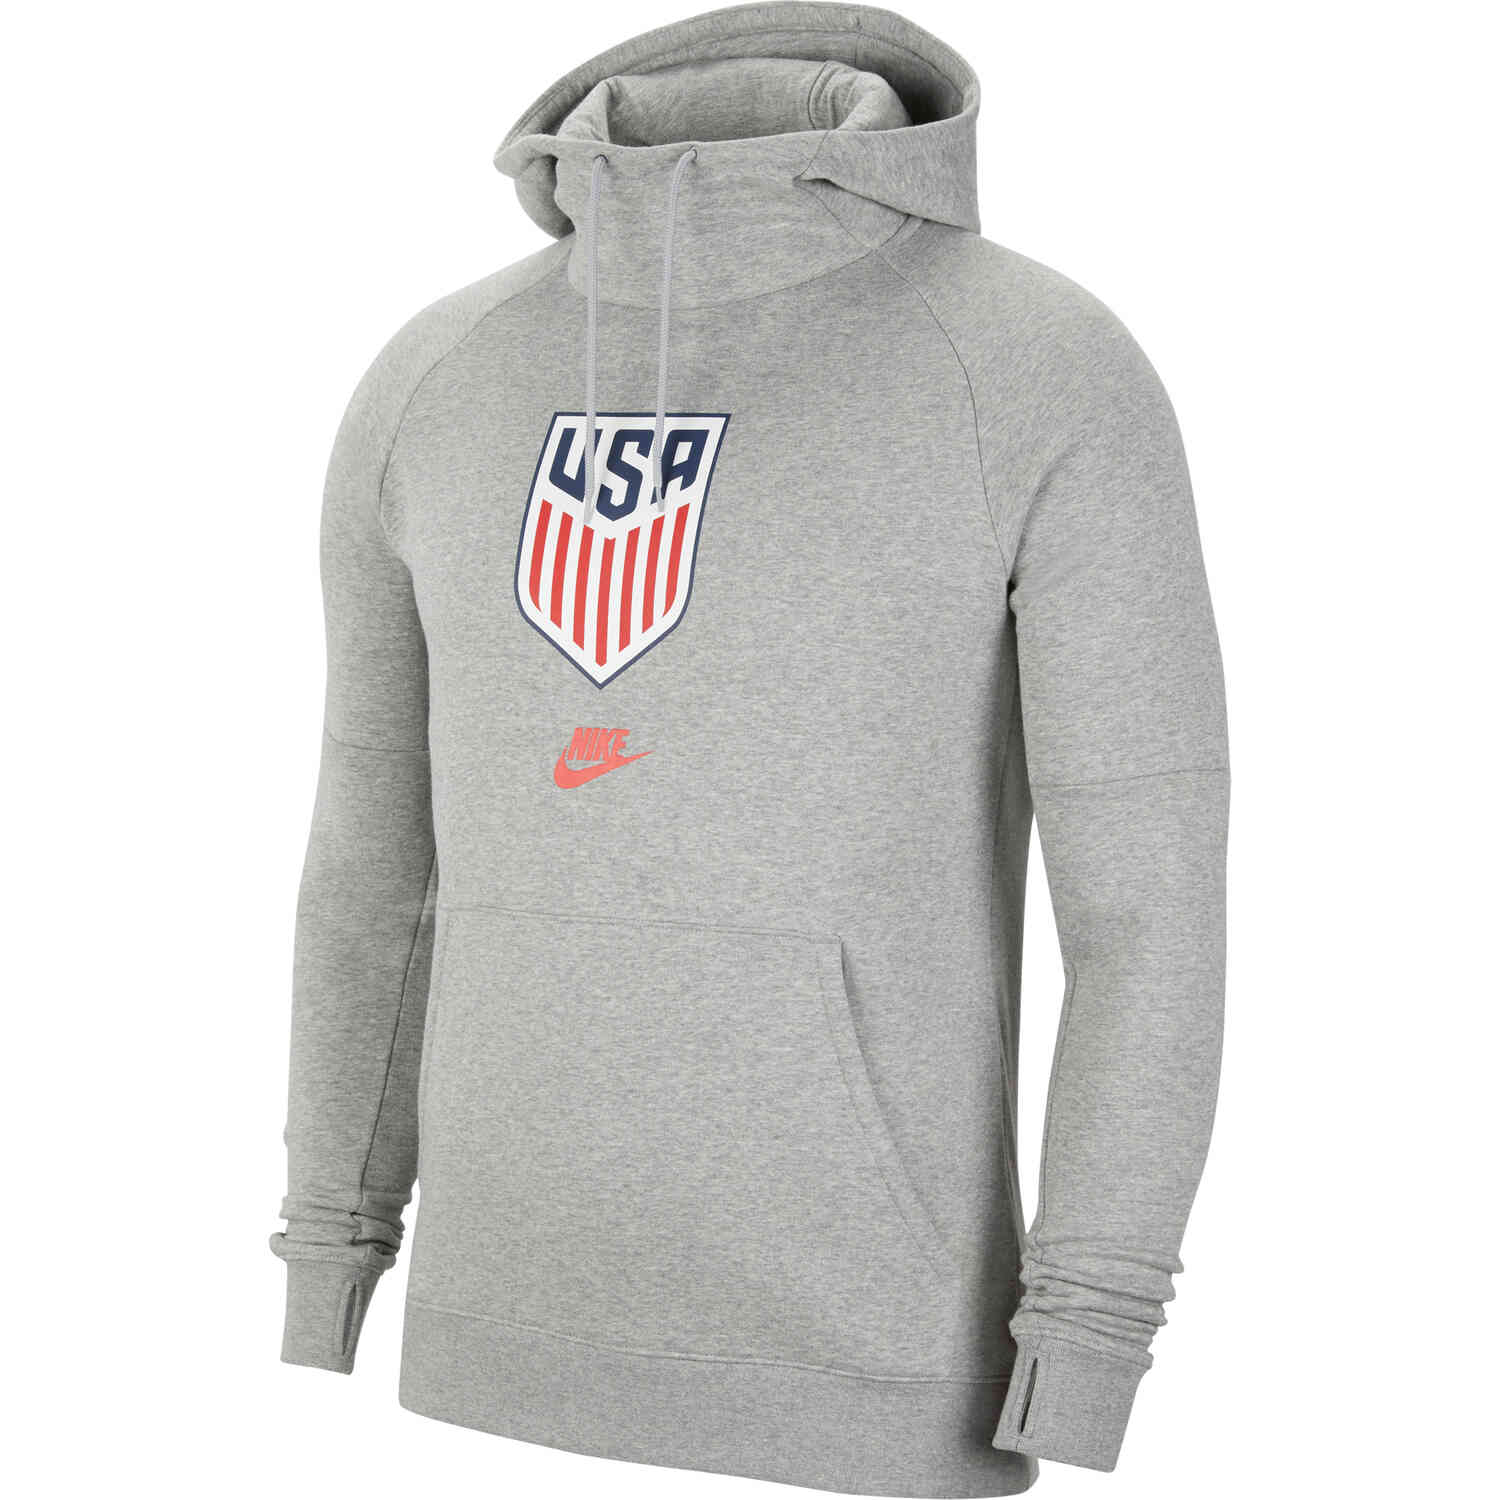 Nike USA Fleece Hoodie - Dk Grey Heather/Speed Red - SoccerPro